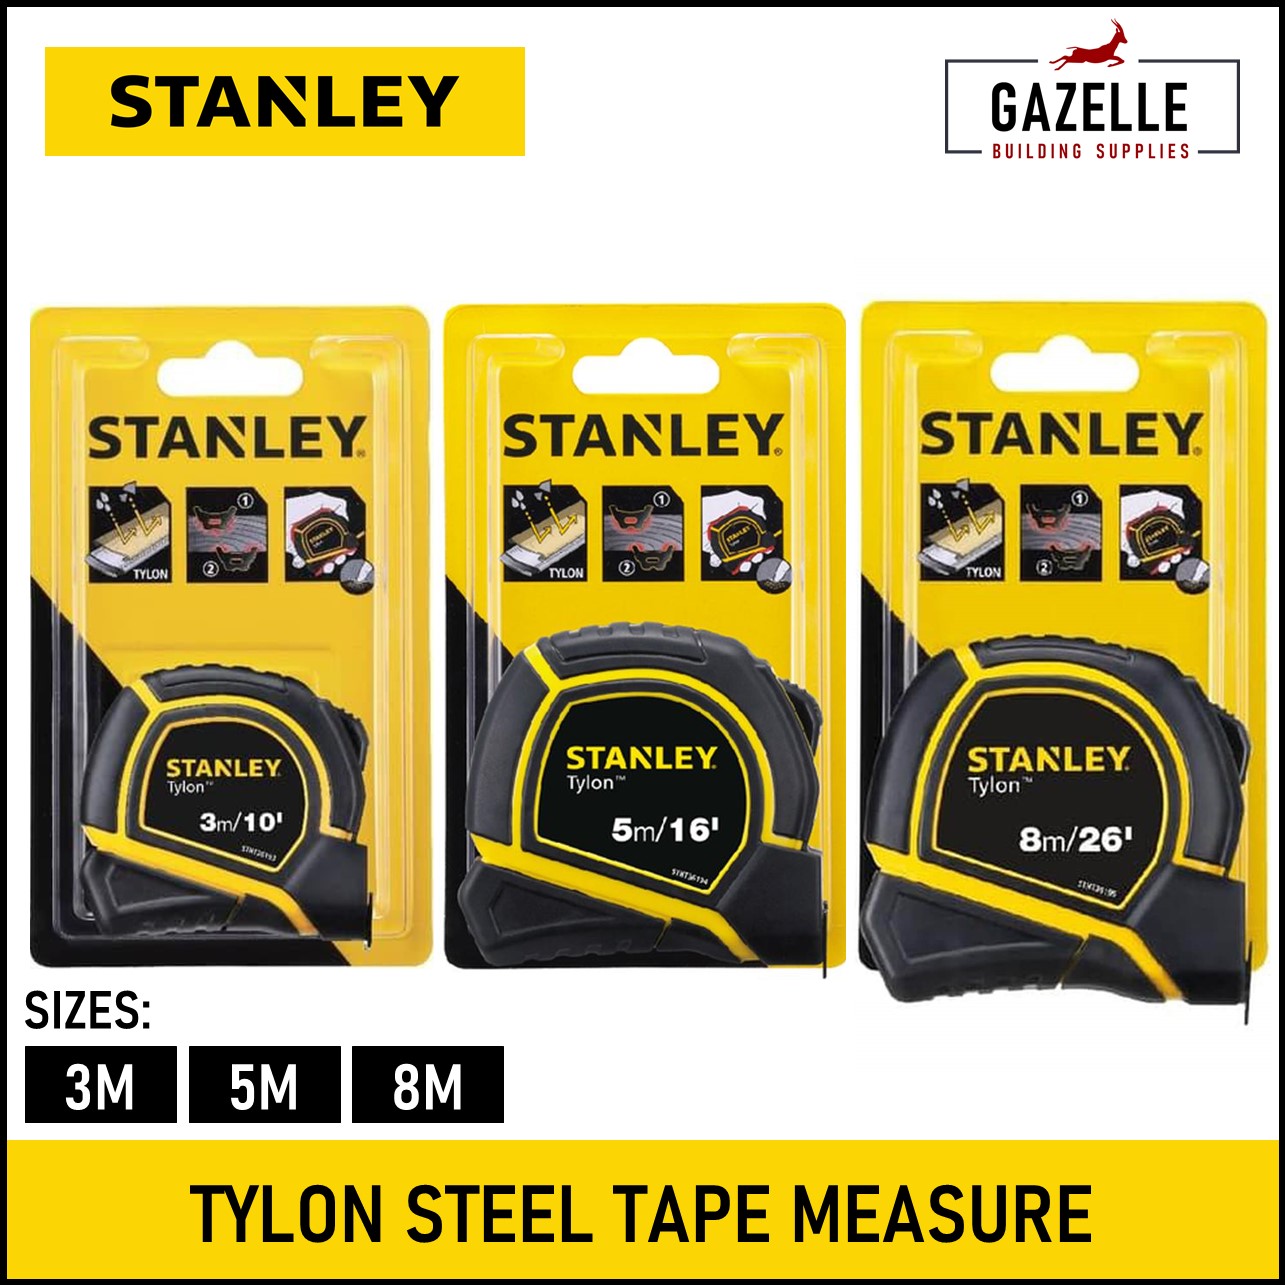 Buy 50m Stanley Measuring Tape online